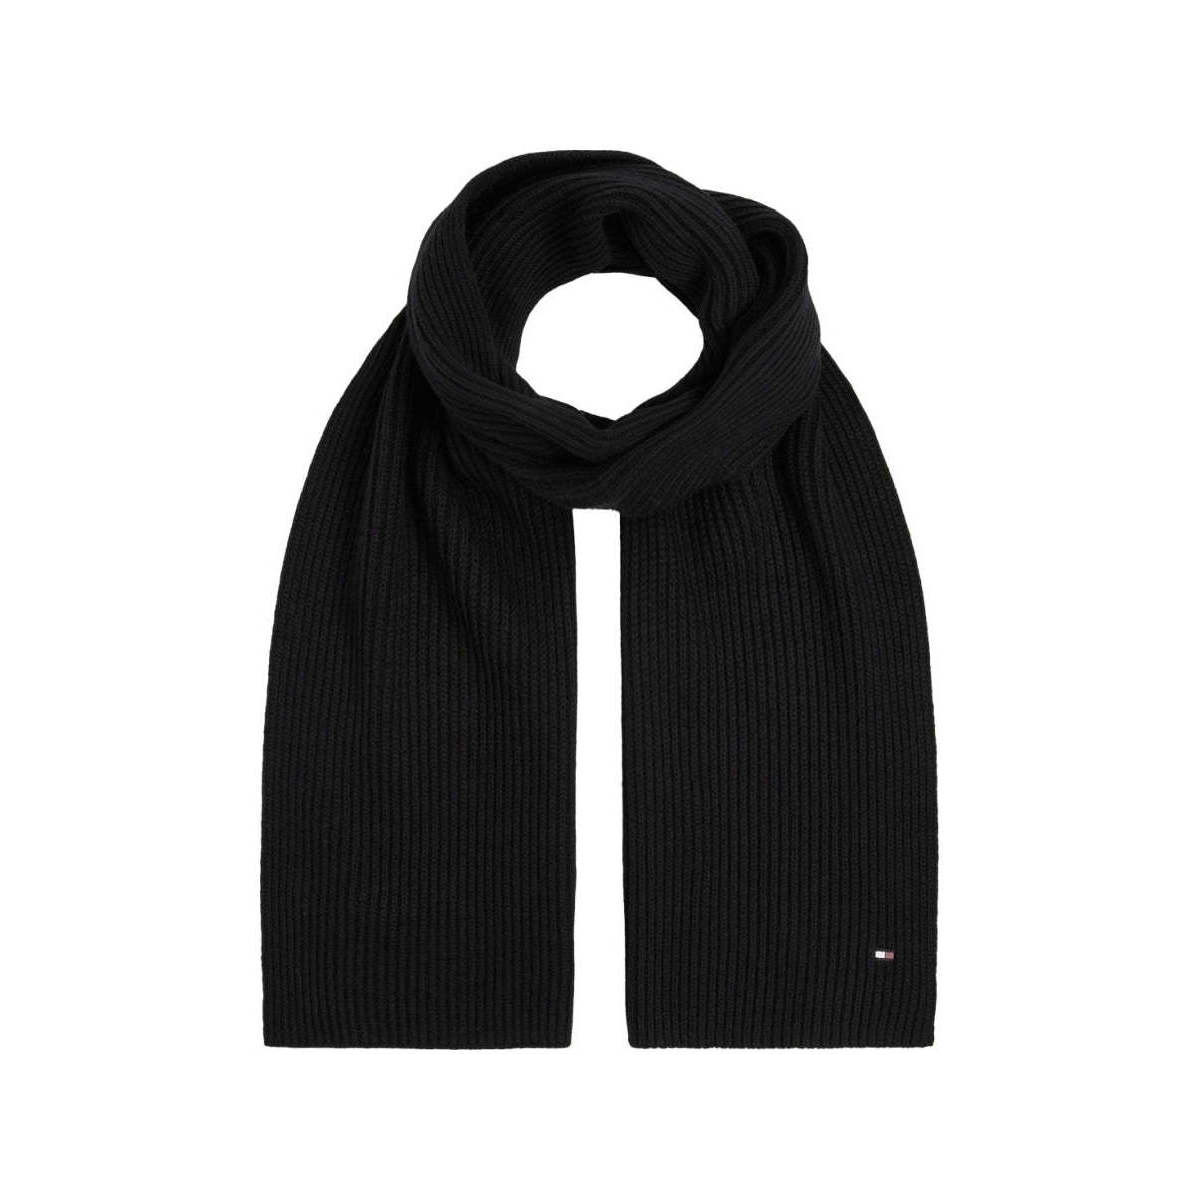 Accessoires textile Homme Echarpes / Etoles / Foulards Tommy Hilfiger essential flag knitted scarf Noir